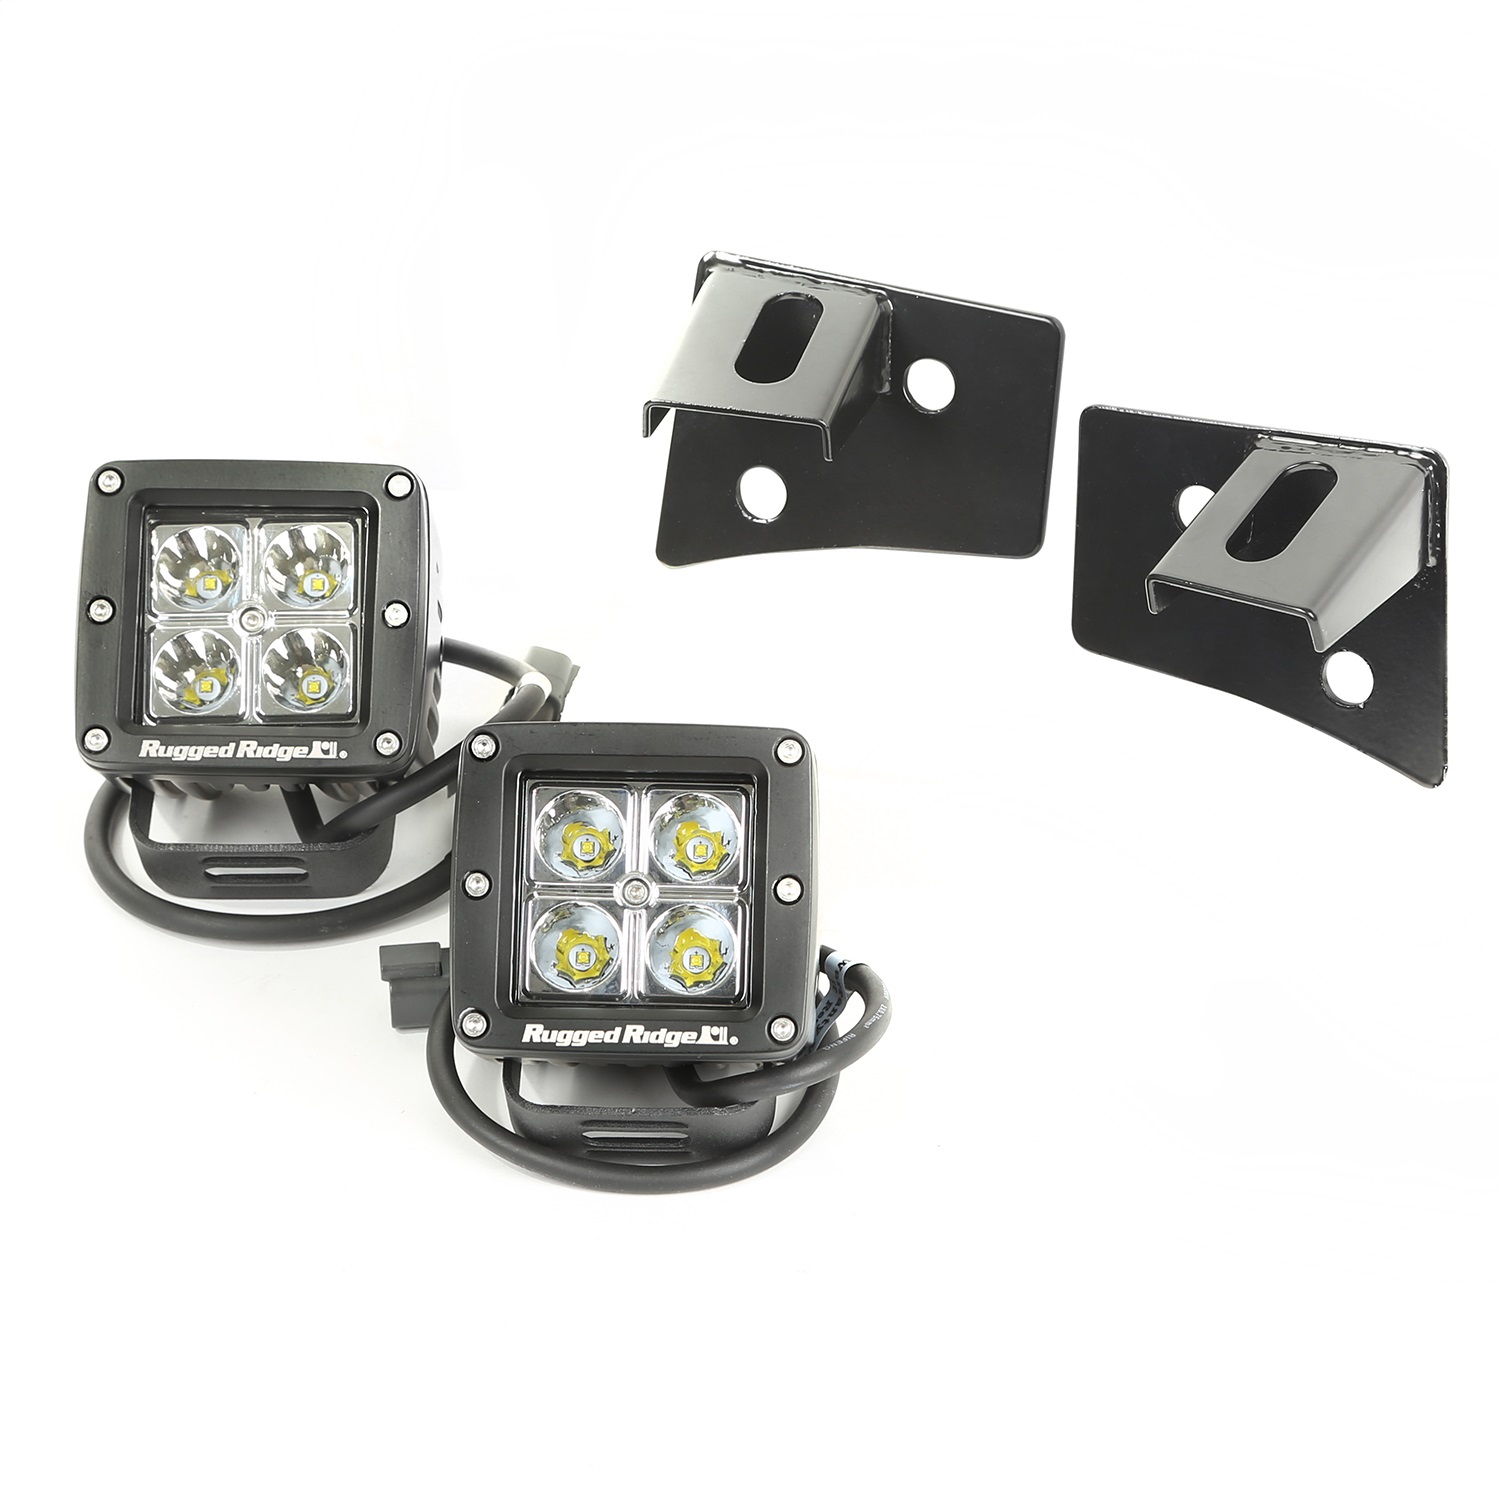 Rugged Ridge 11027.10 Windshield Bracket LED Light Kit Fits 07-18 Wrangler (JK)